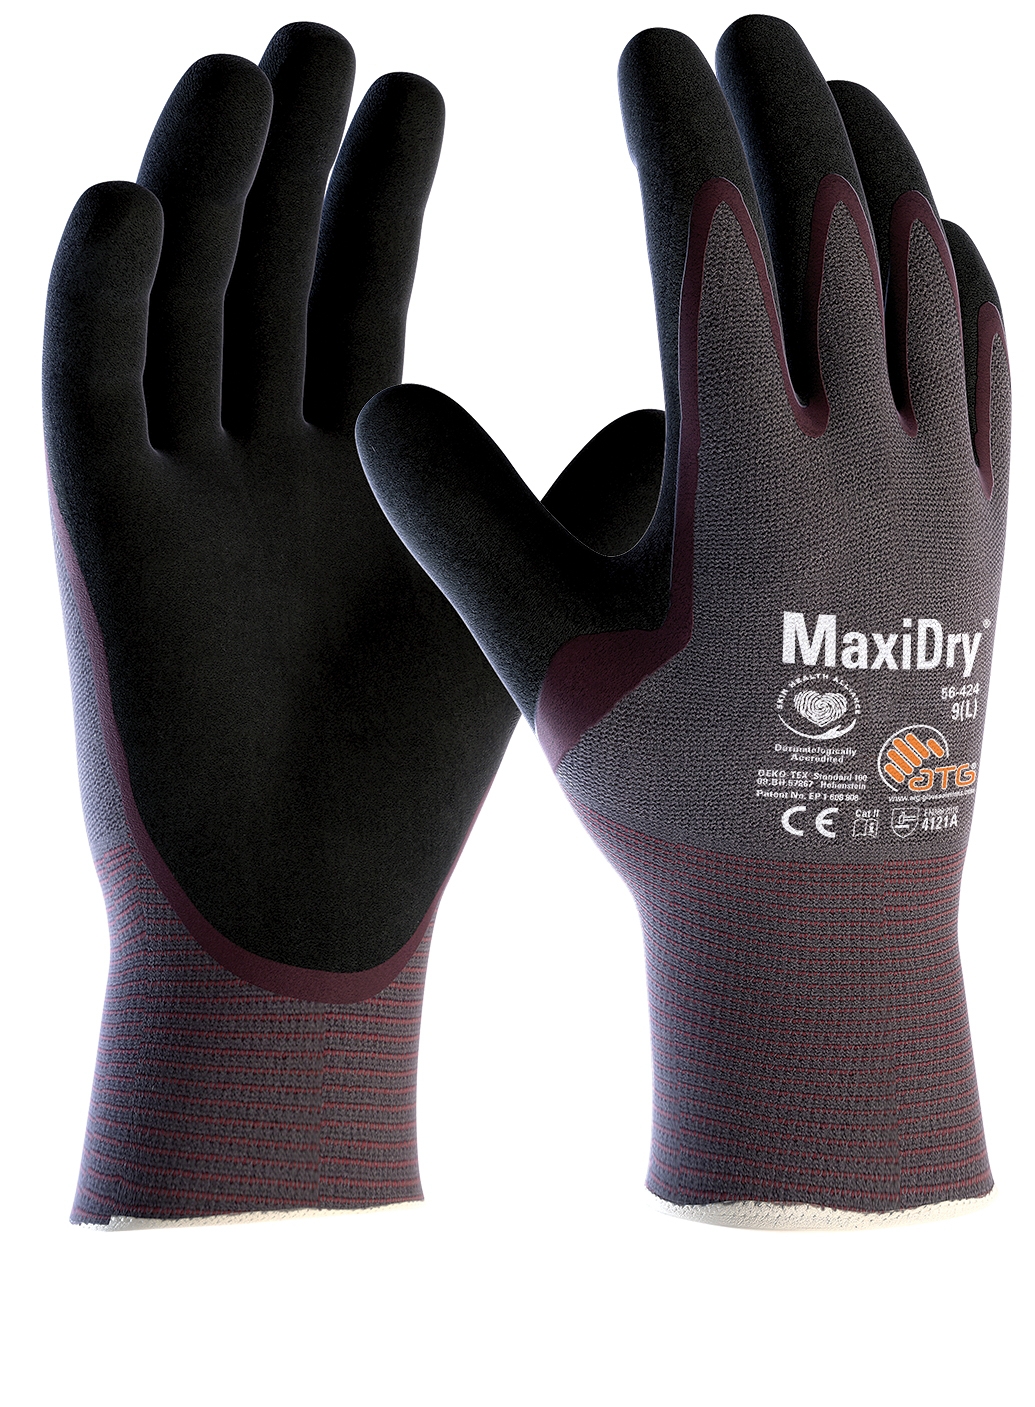 MaxiDry®  Nylon-Strickhandschuhe (56-424) in Lila, Größe 8